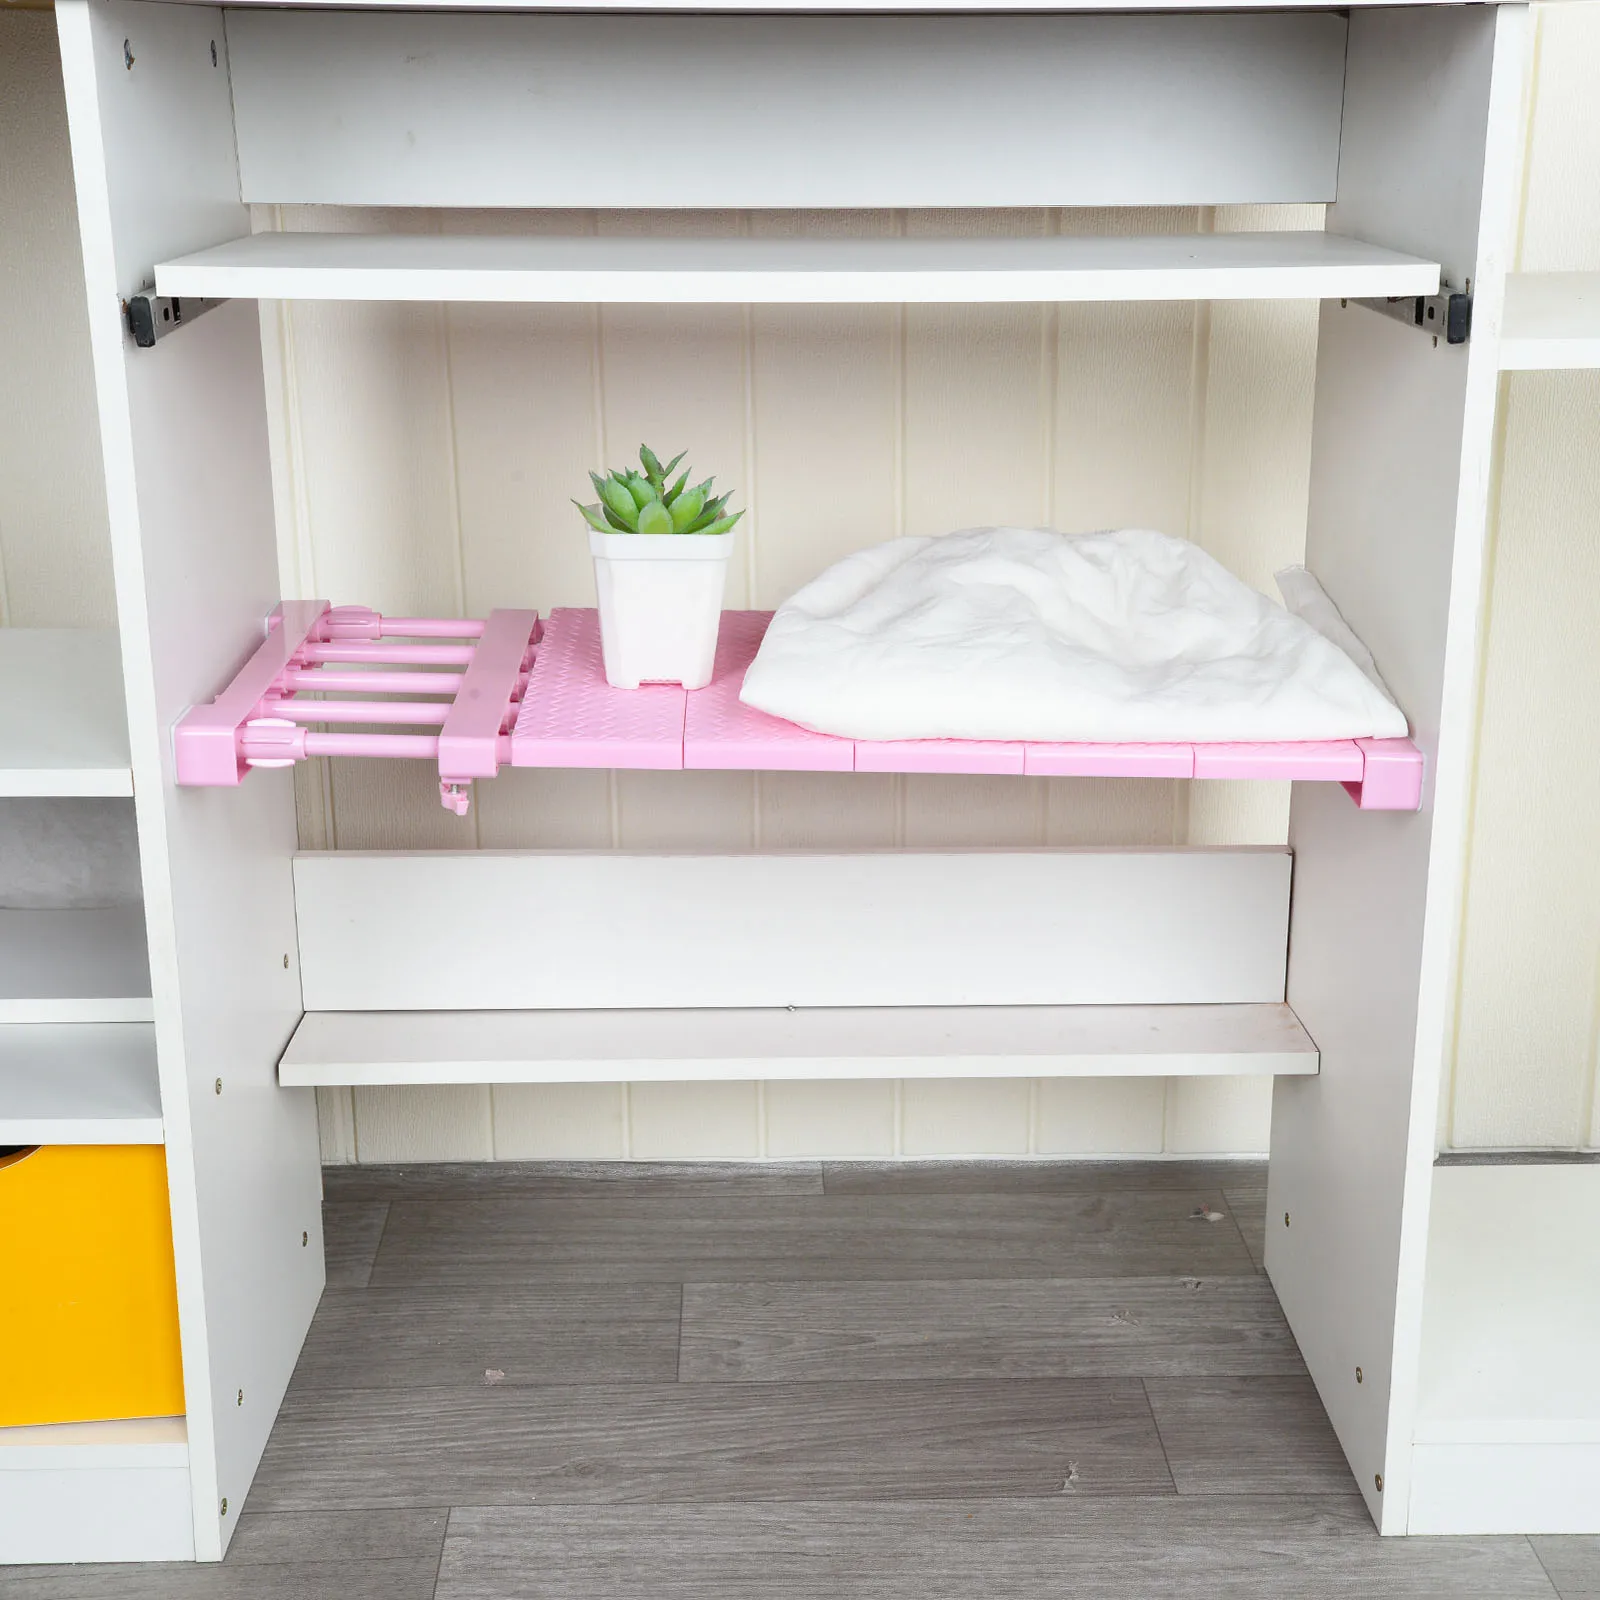 Adjustable Closet Organizer Storage Shelf Space Saving Wardrobe Wall Mounted Rack Kitchen Home Decorative Cabinet Holders